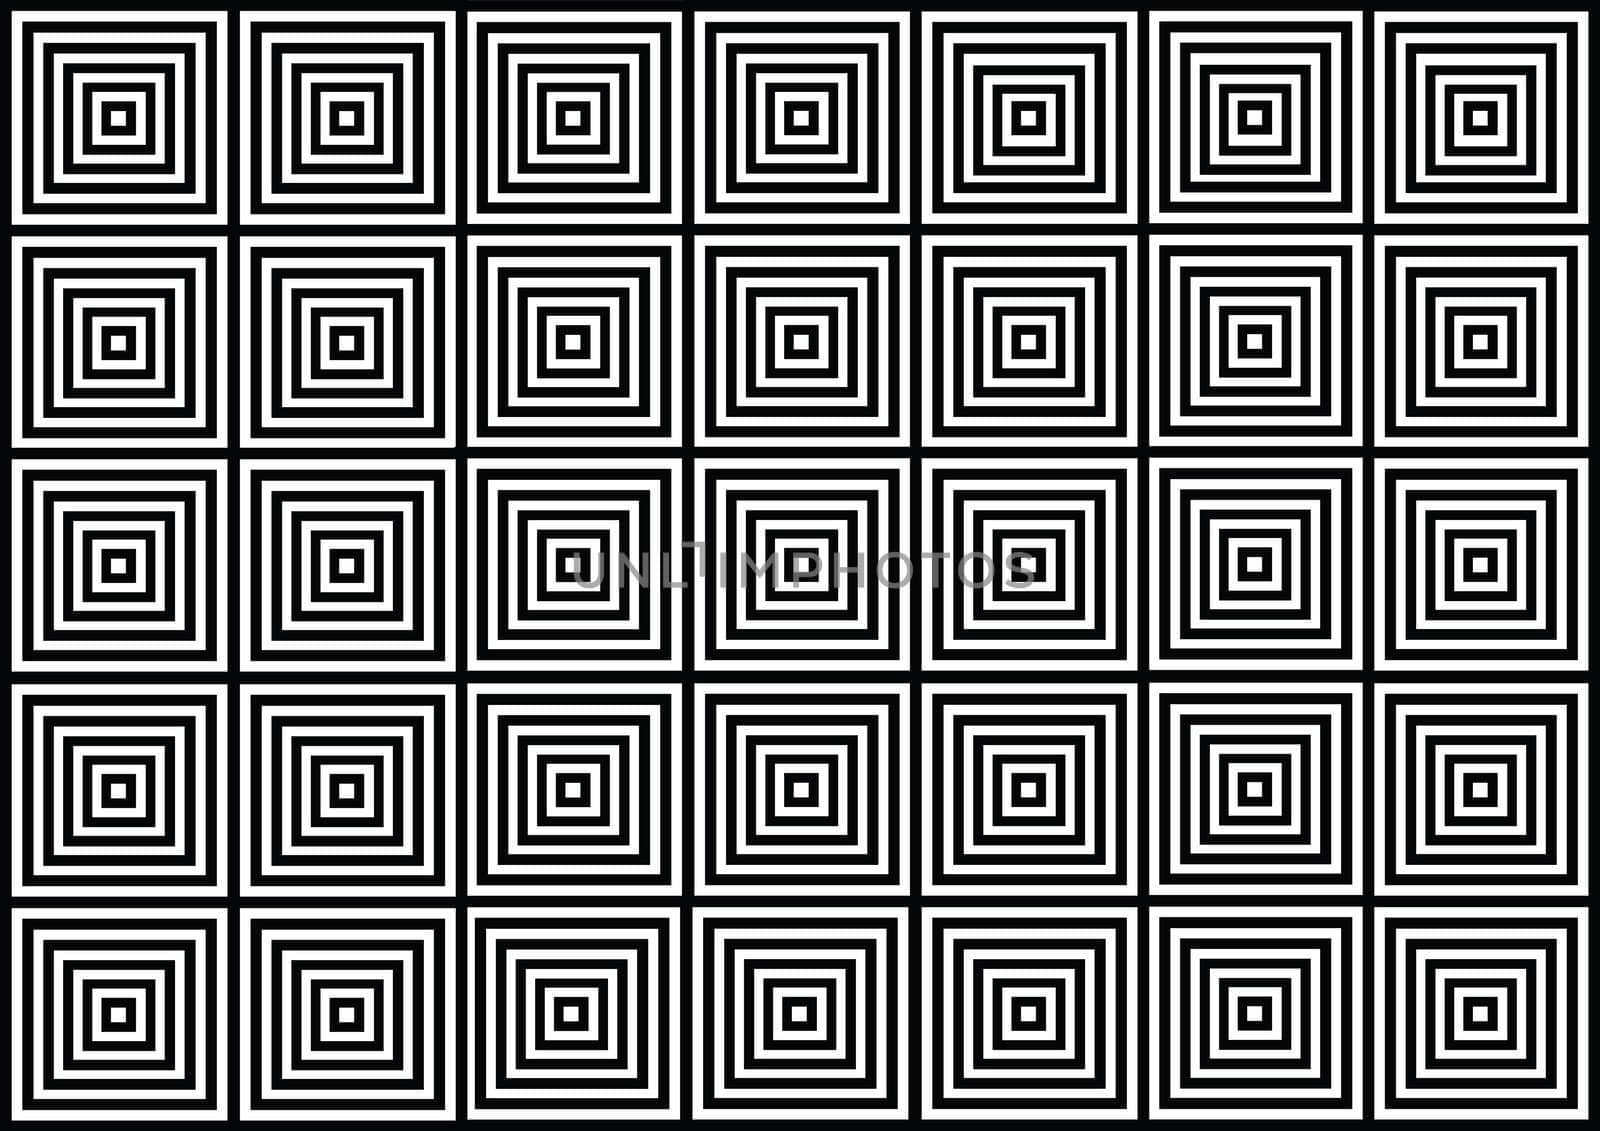 Square pattern by gubgib